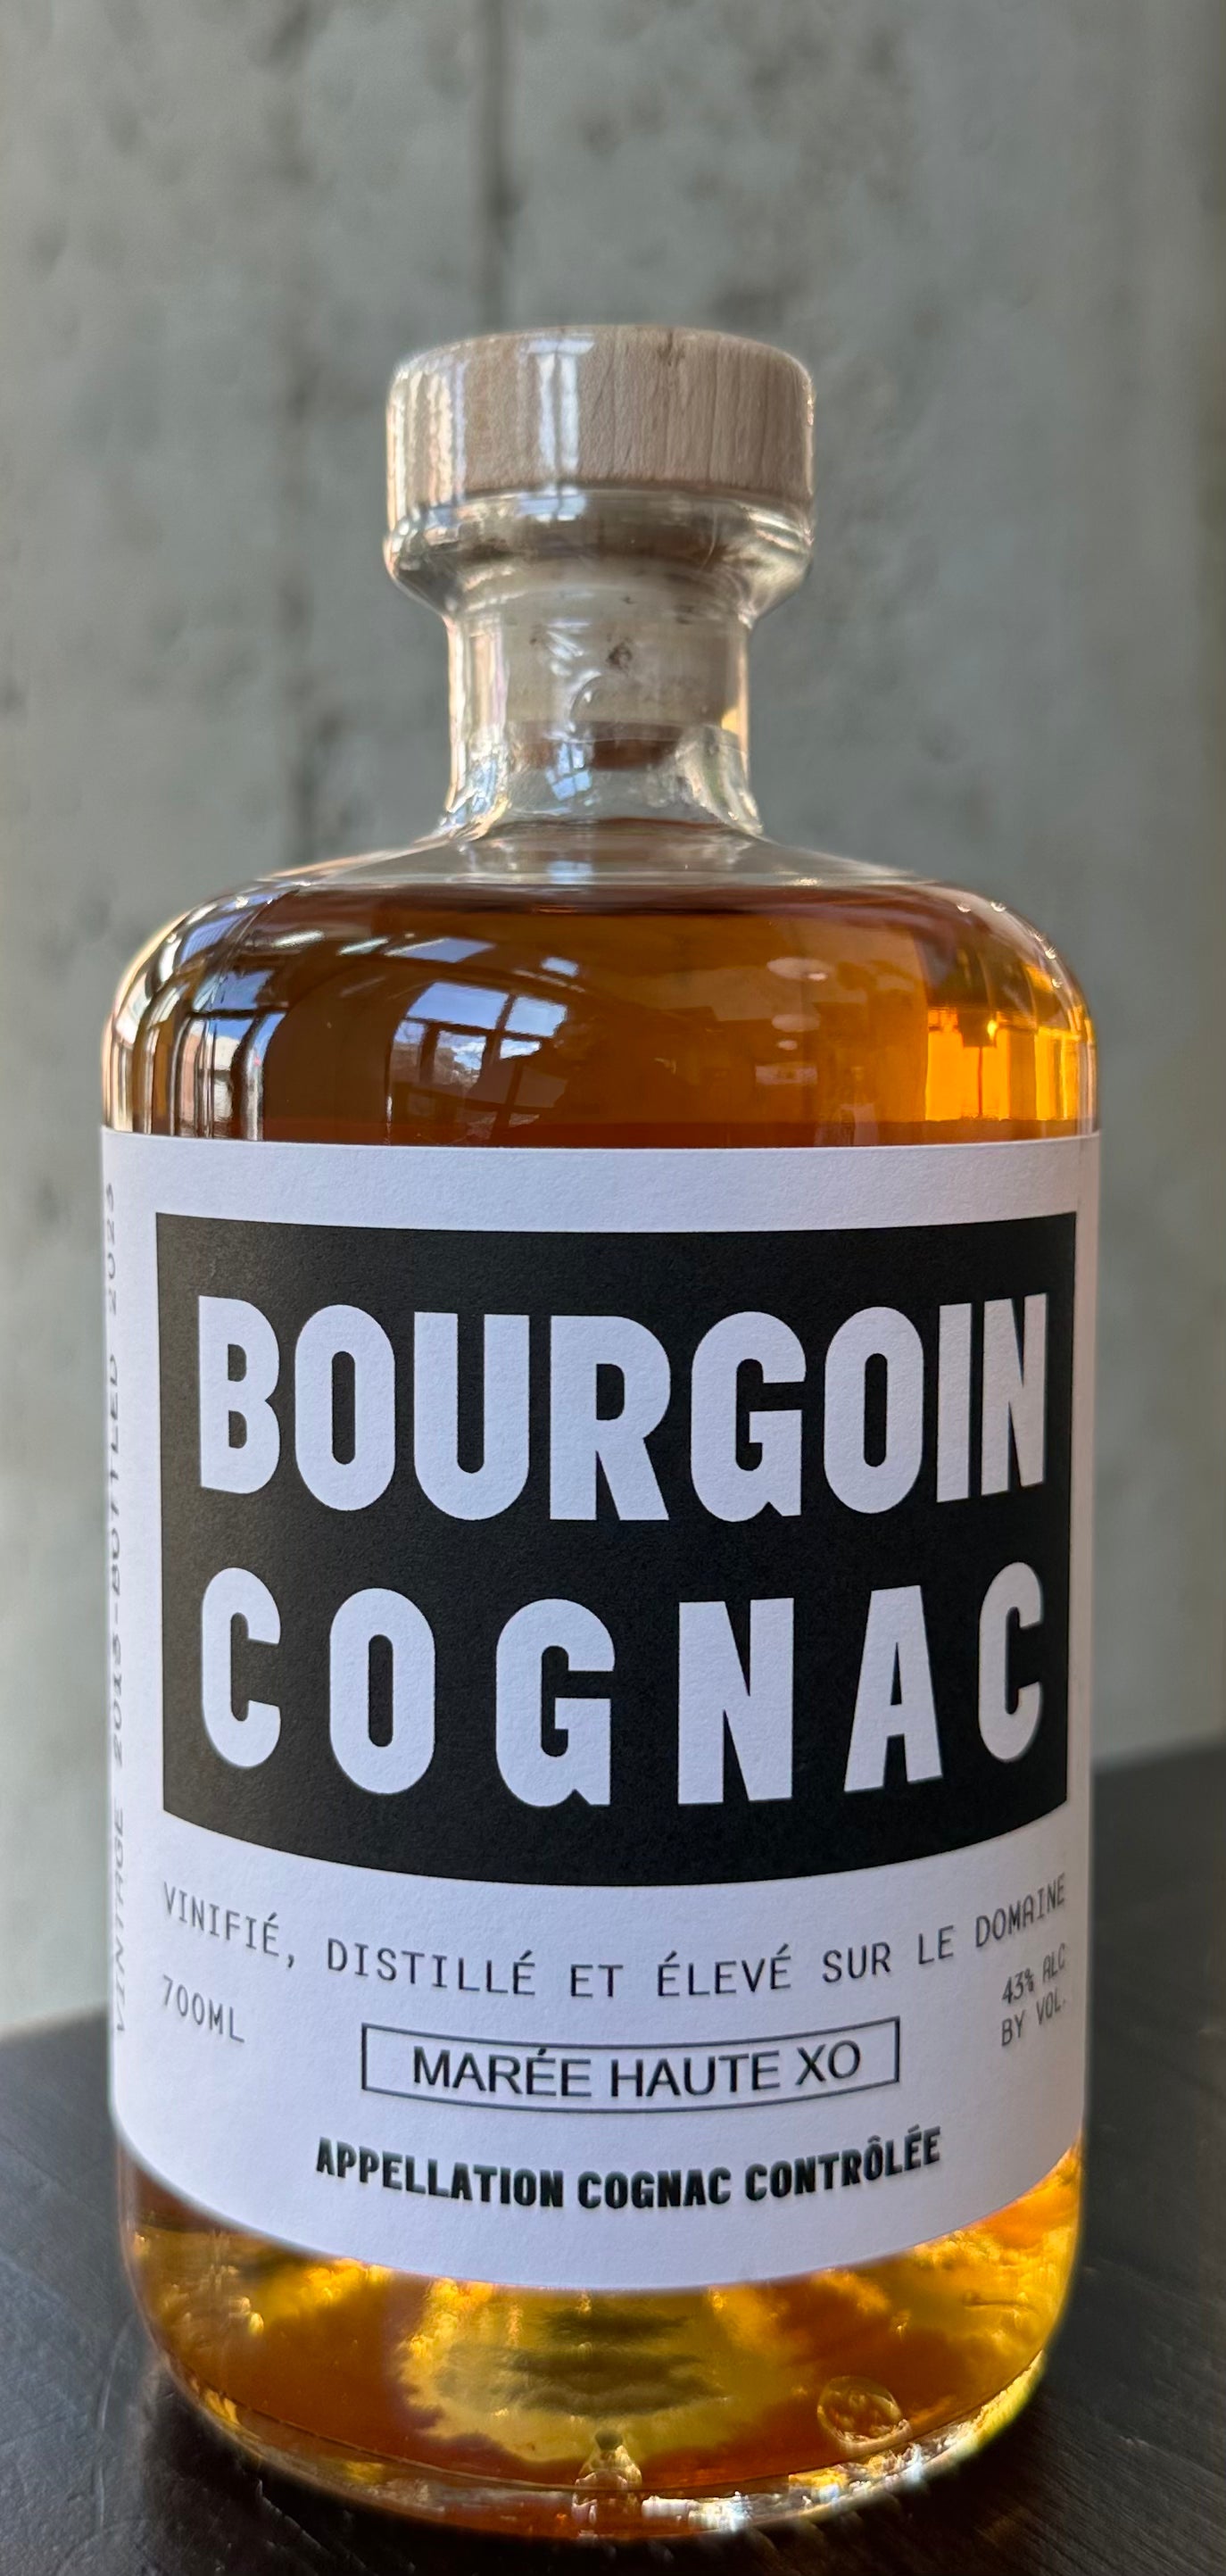 Bourgoin Cognac "Marée Haute XO"